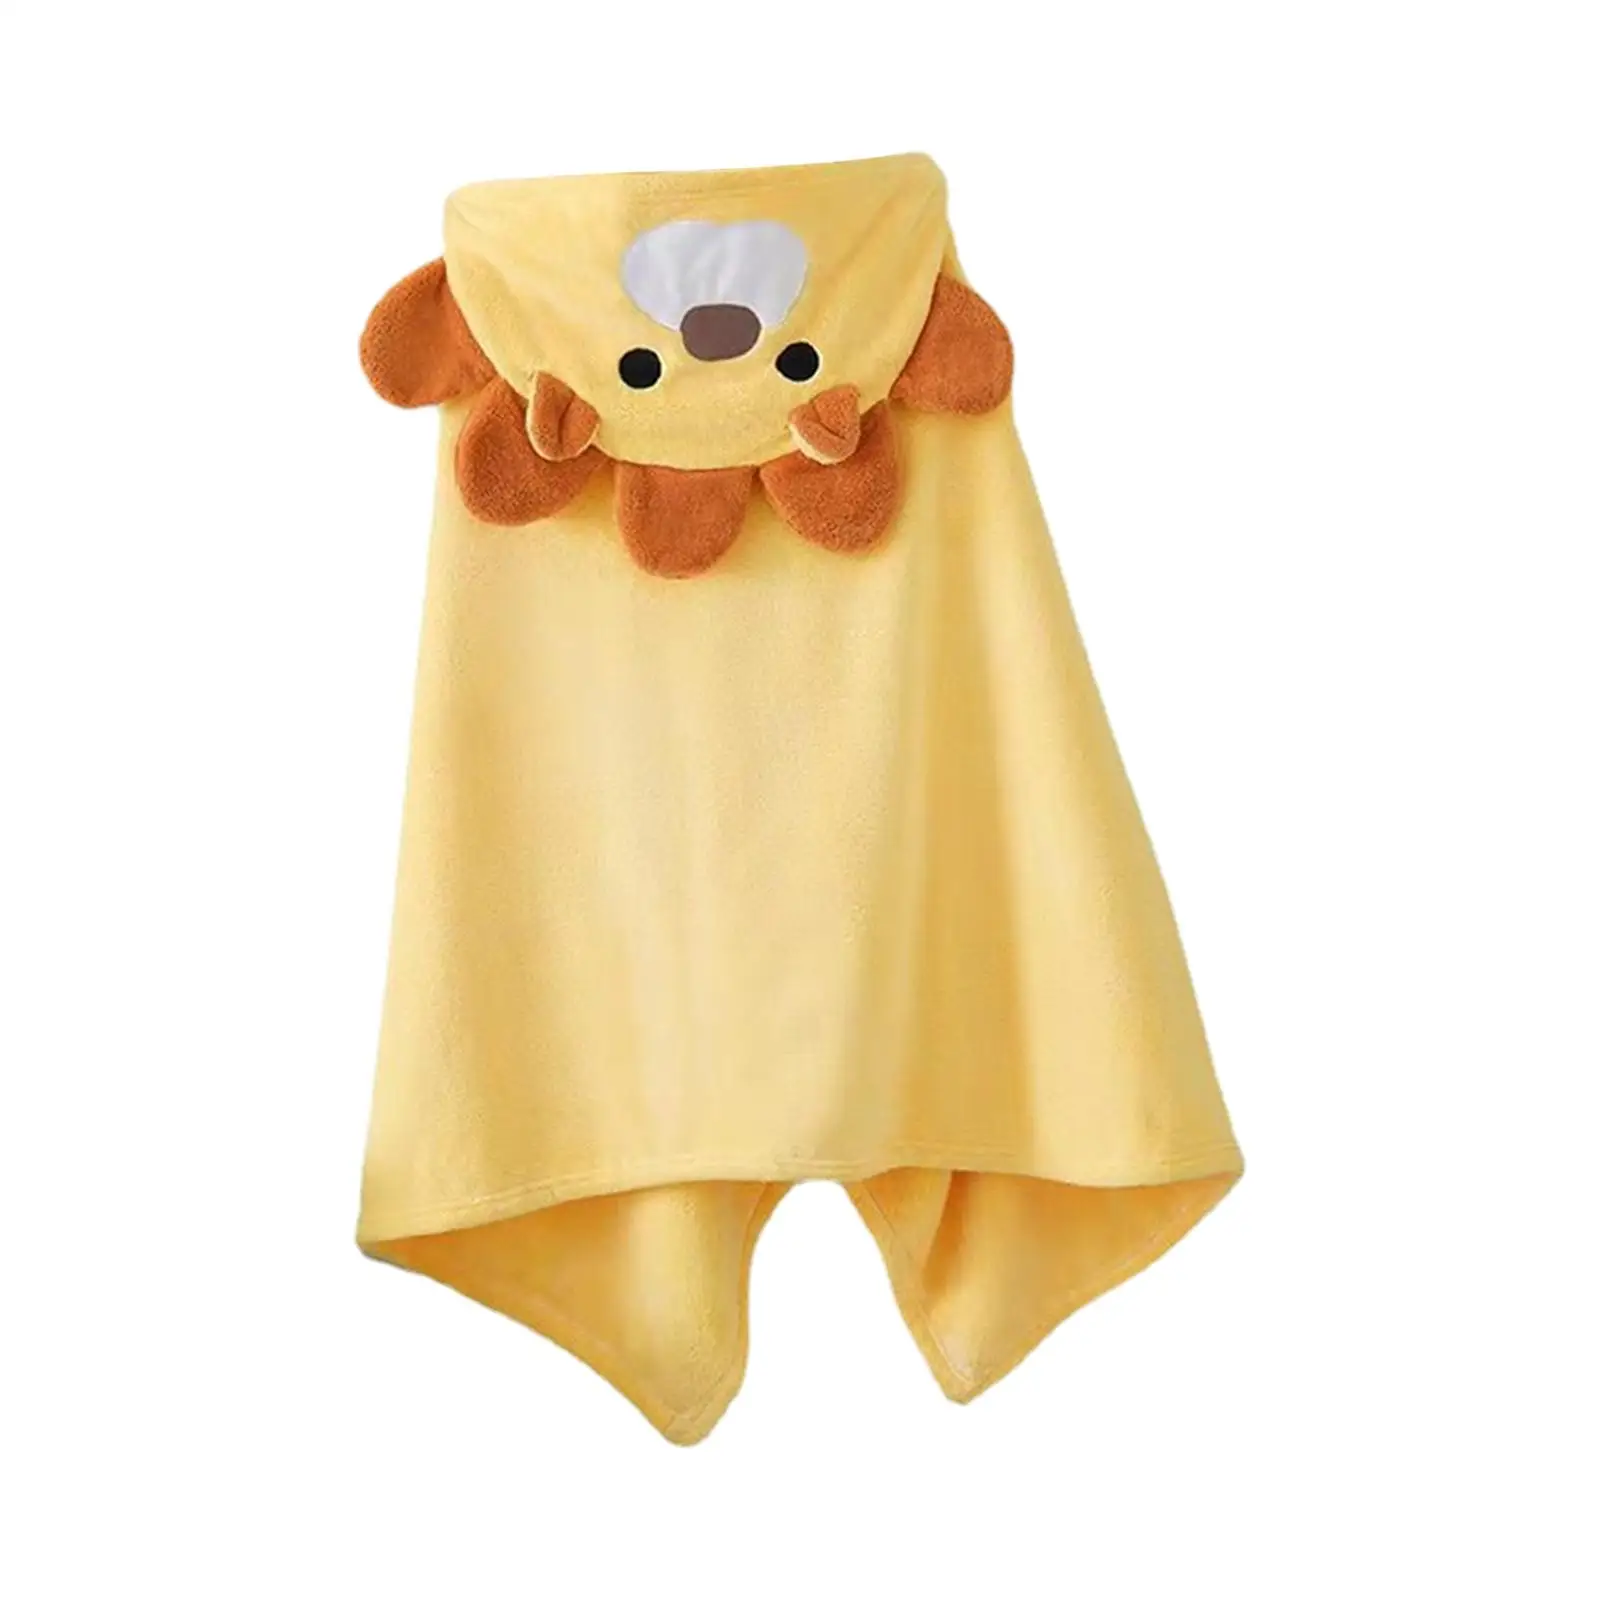 Toddlers Bathrobe with Hood Stylish for Baby Boys Girls Soft and Comfortable Infant Towel Blanket Animal Hooded Bathrobe